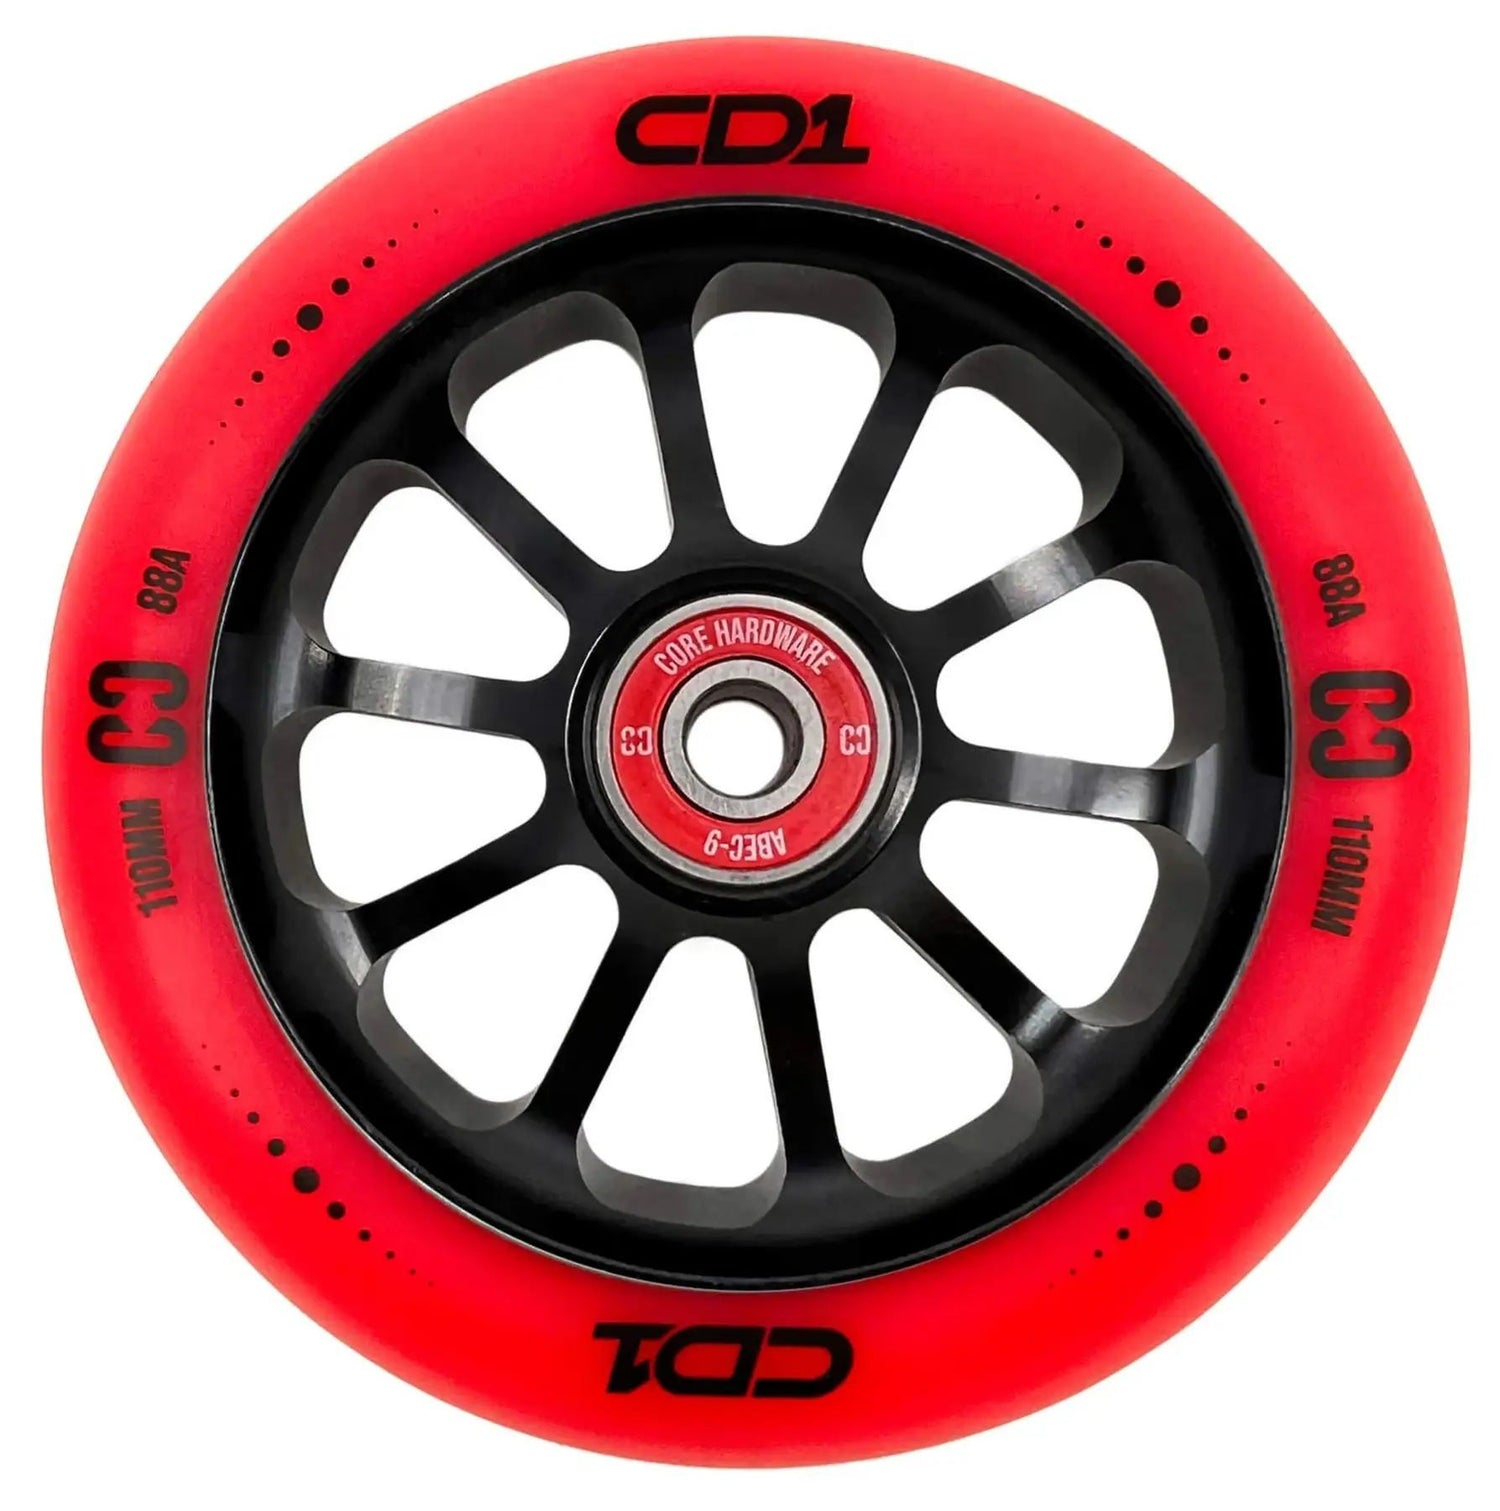 CORE CD1 Sparkcykel Hjul (Röd)